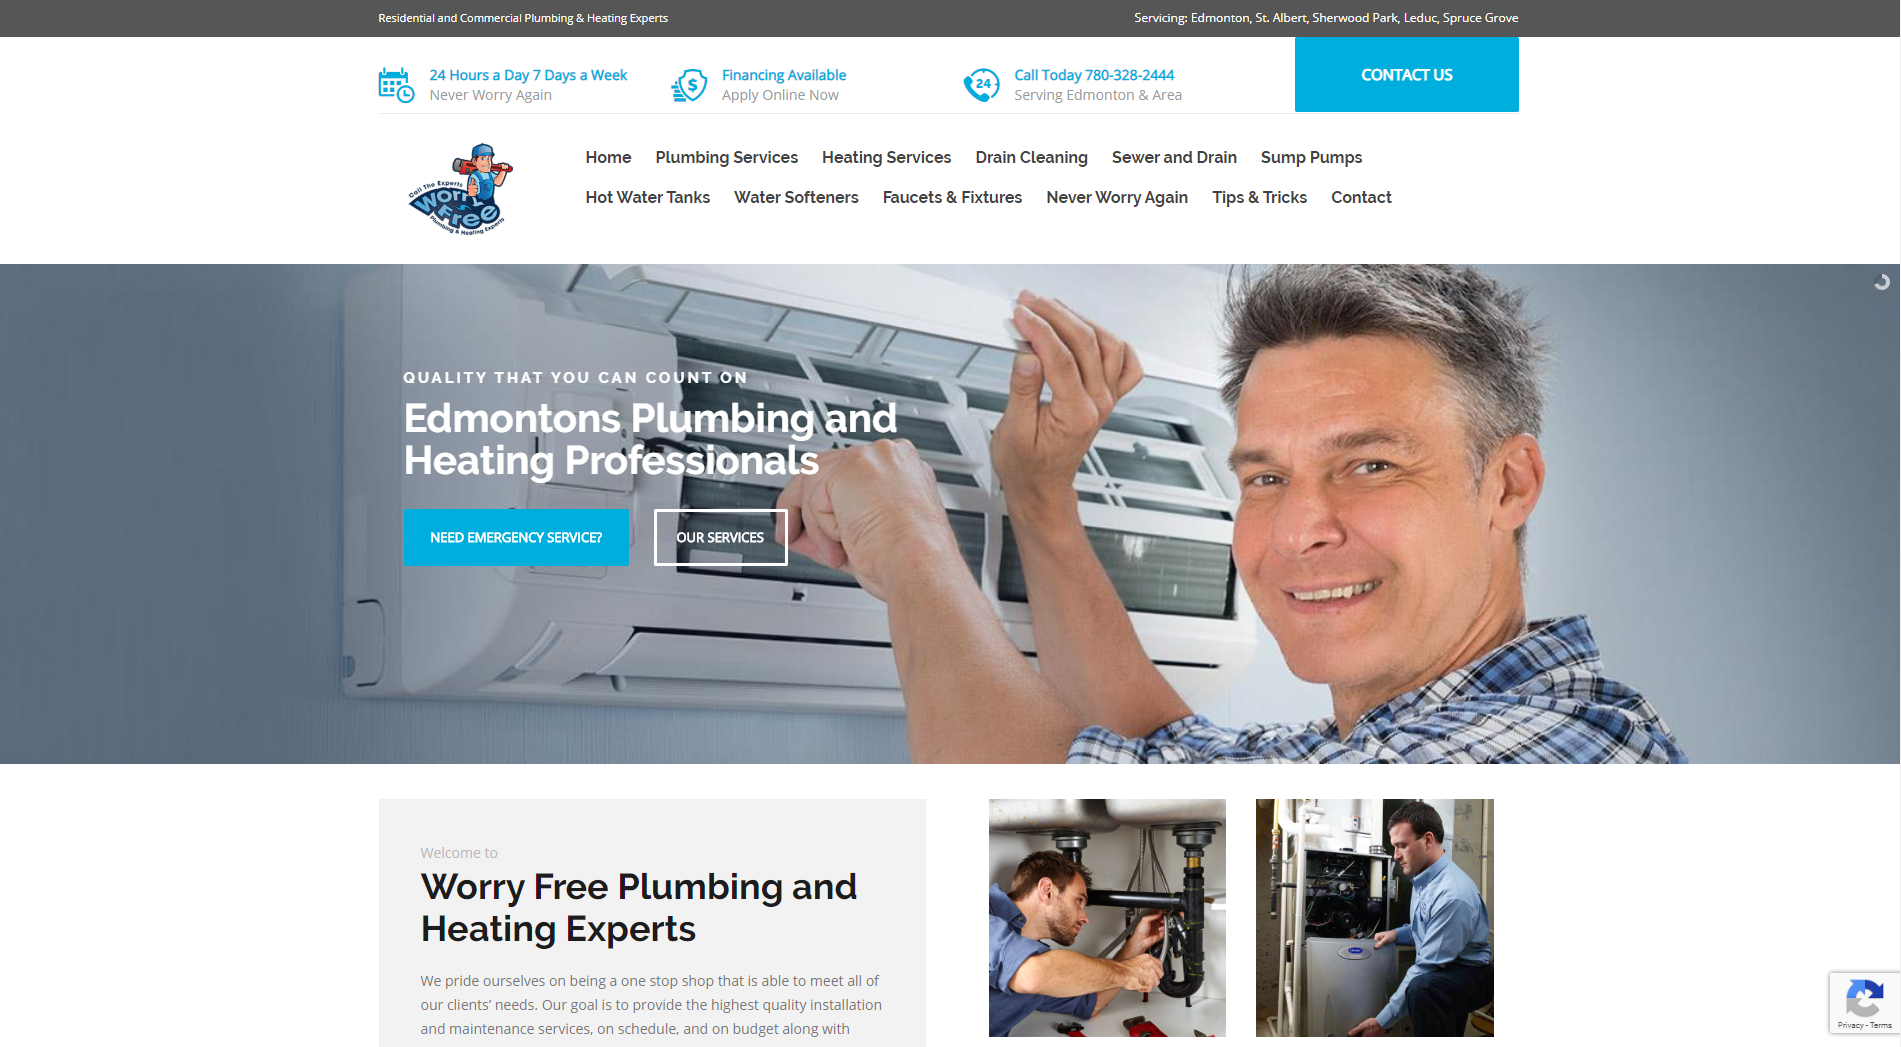 SITE - WorWorry Free Plumbing & Heating Expertsry Free Plumbing